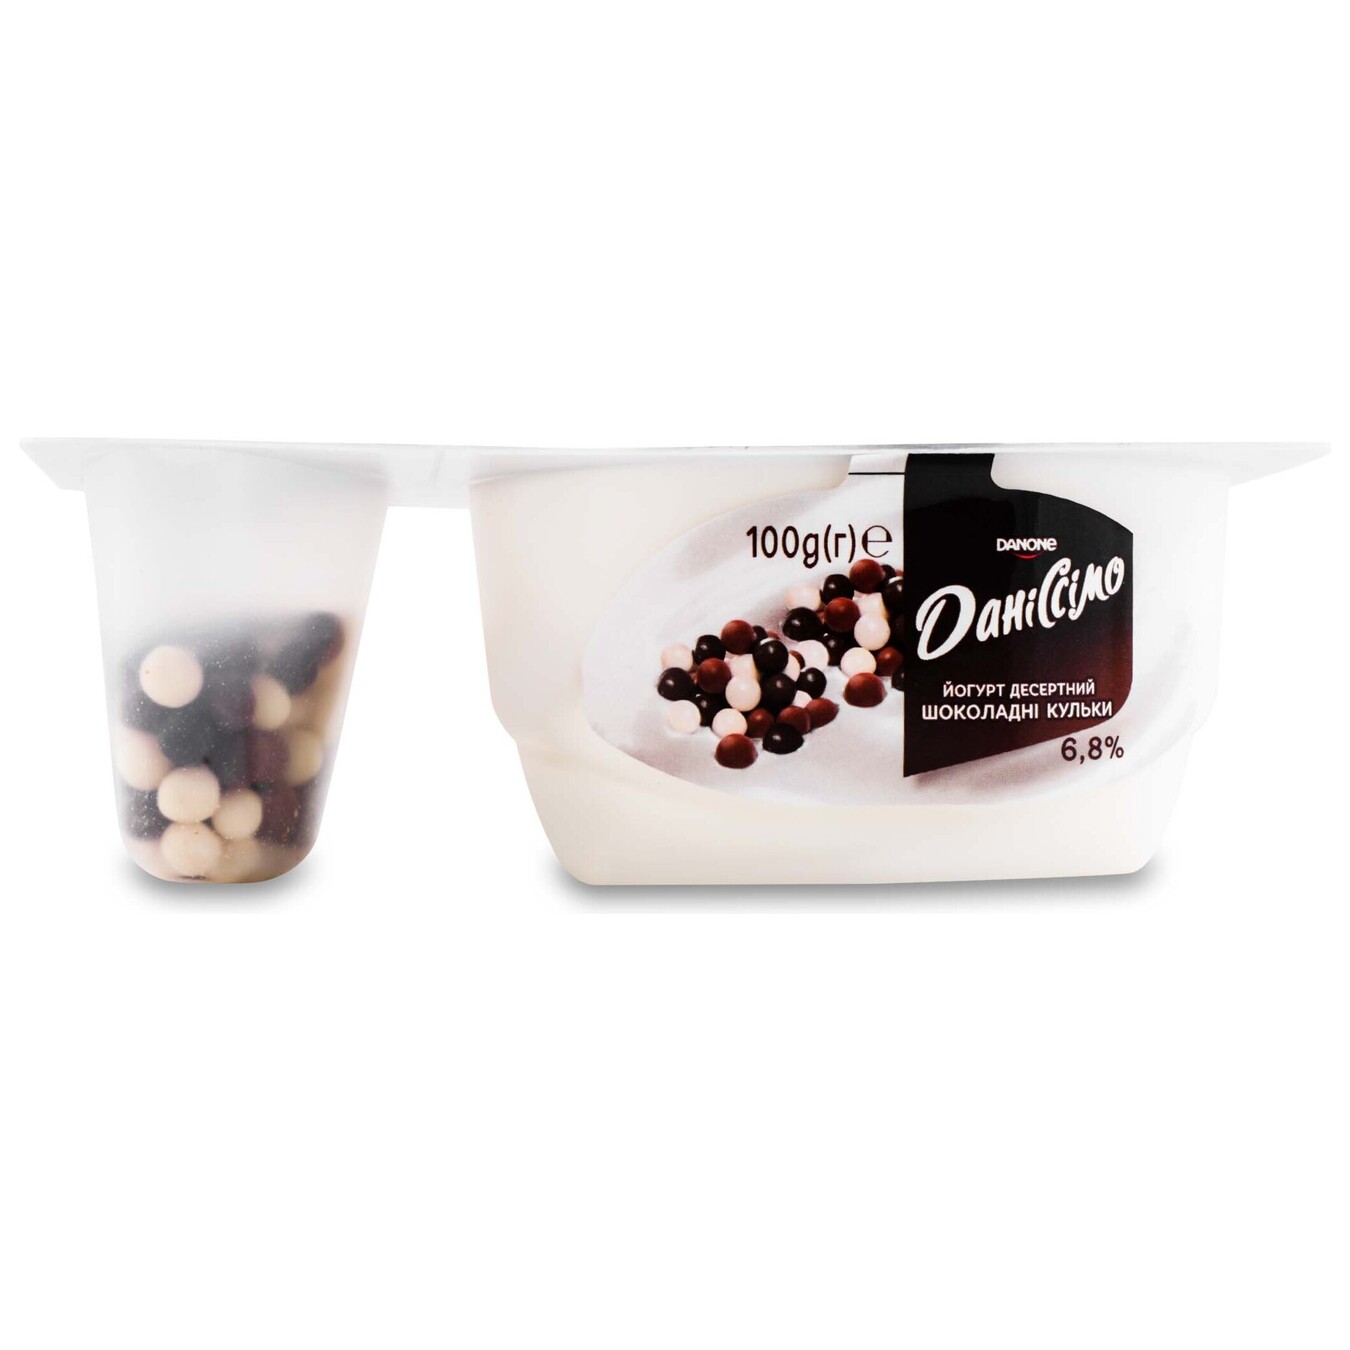 Yogurt Danissimo Fantasy with chocolate balls 6,8% 100g